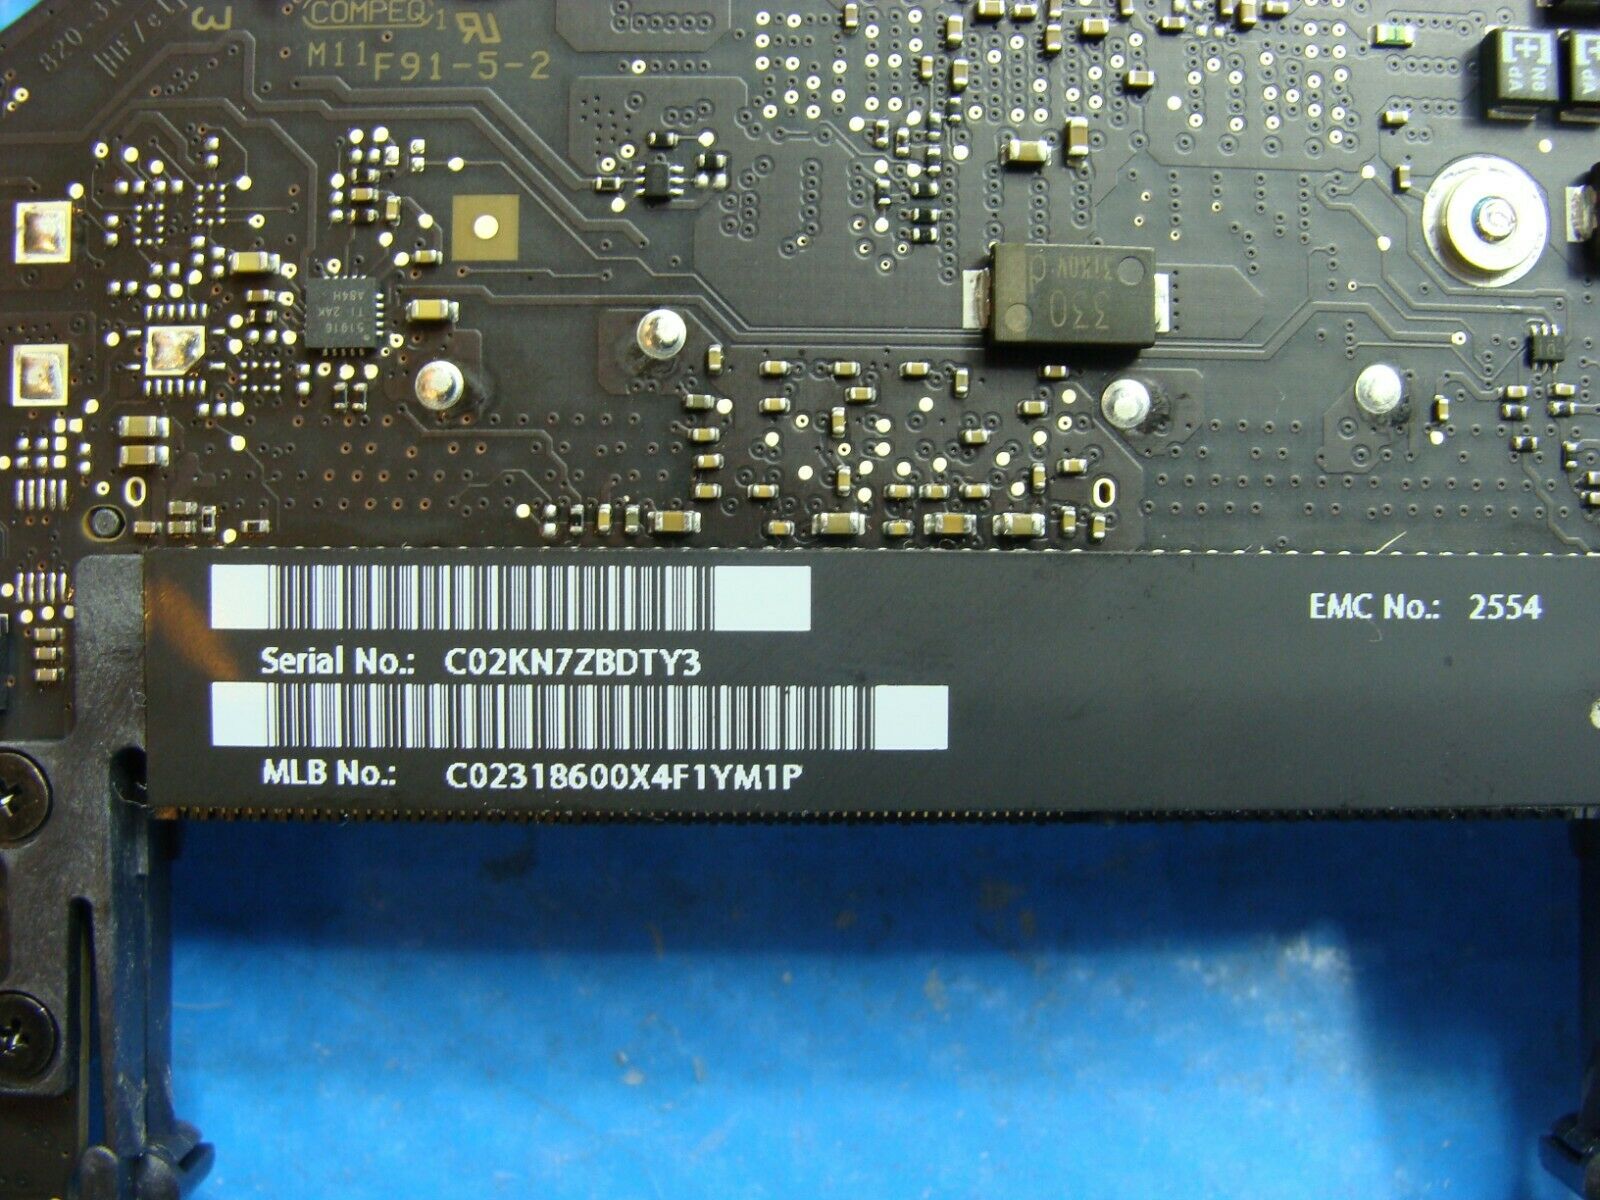 MacBook Pro A1278 13 2012 MD101LL/A i5-3210M 2.5GHz Logic Board 820-3115-B AS IS - Laptop Parts - Buy Authentic Computer Parts - Top Seller Ebay